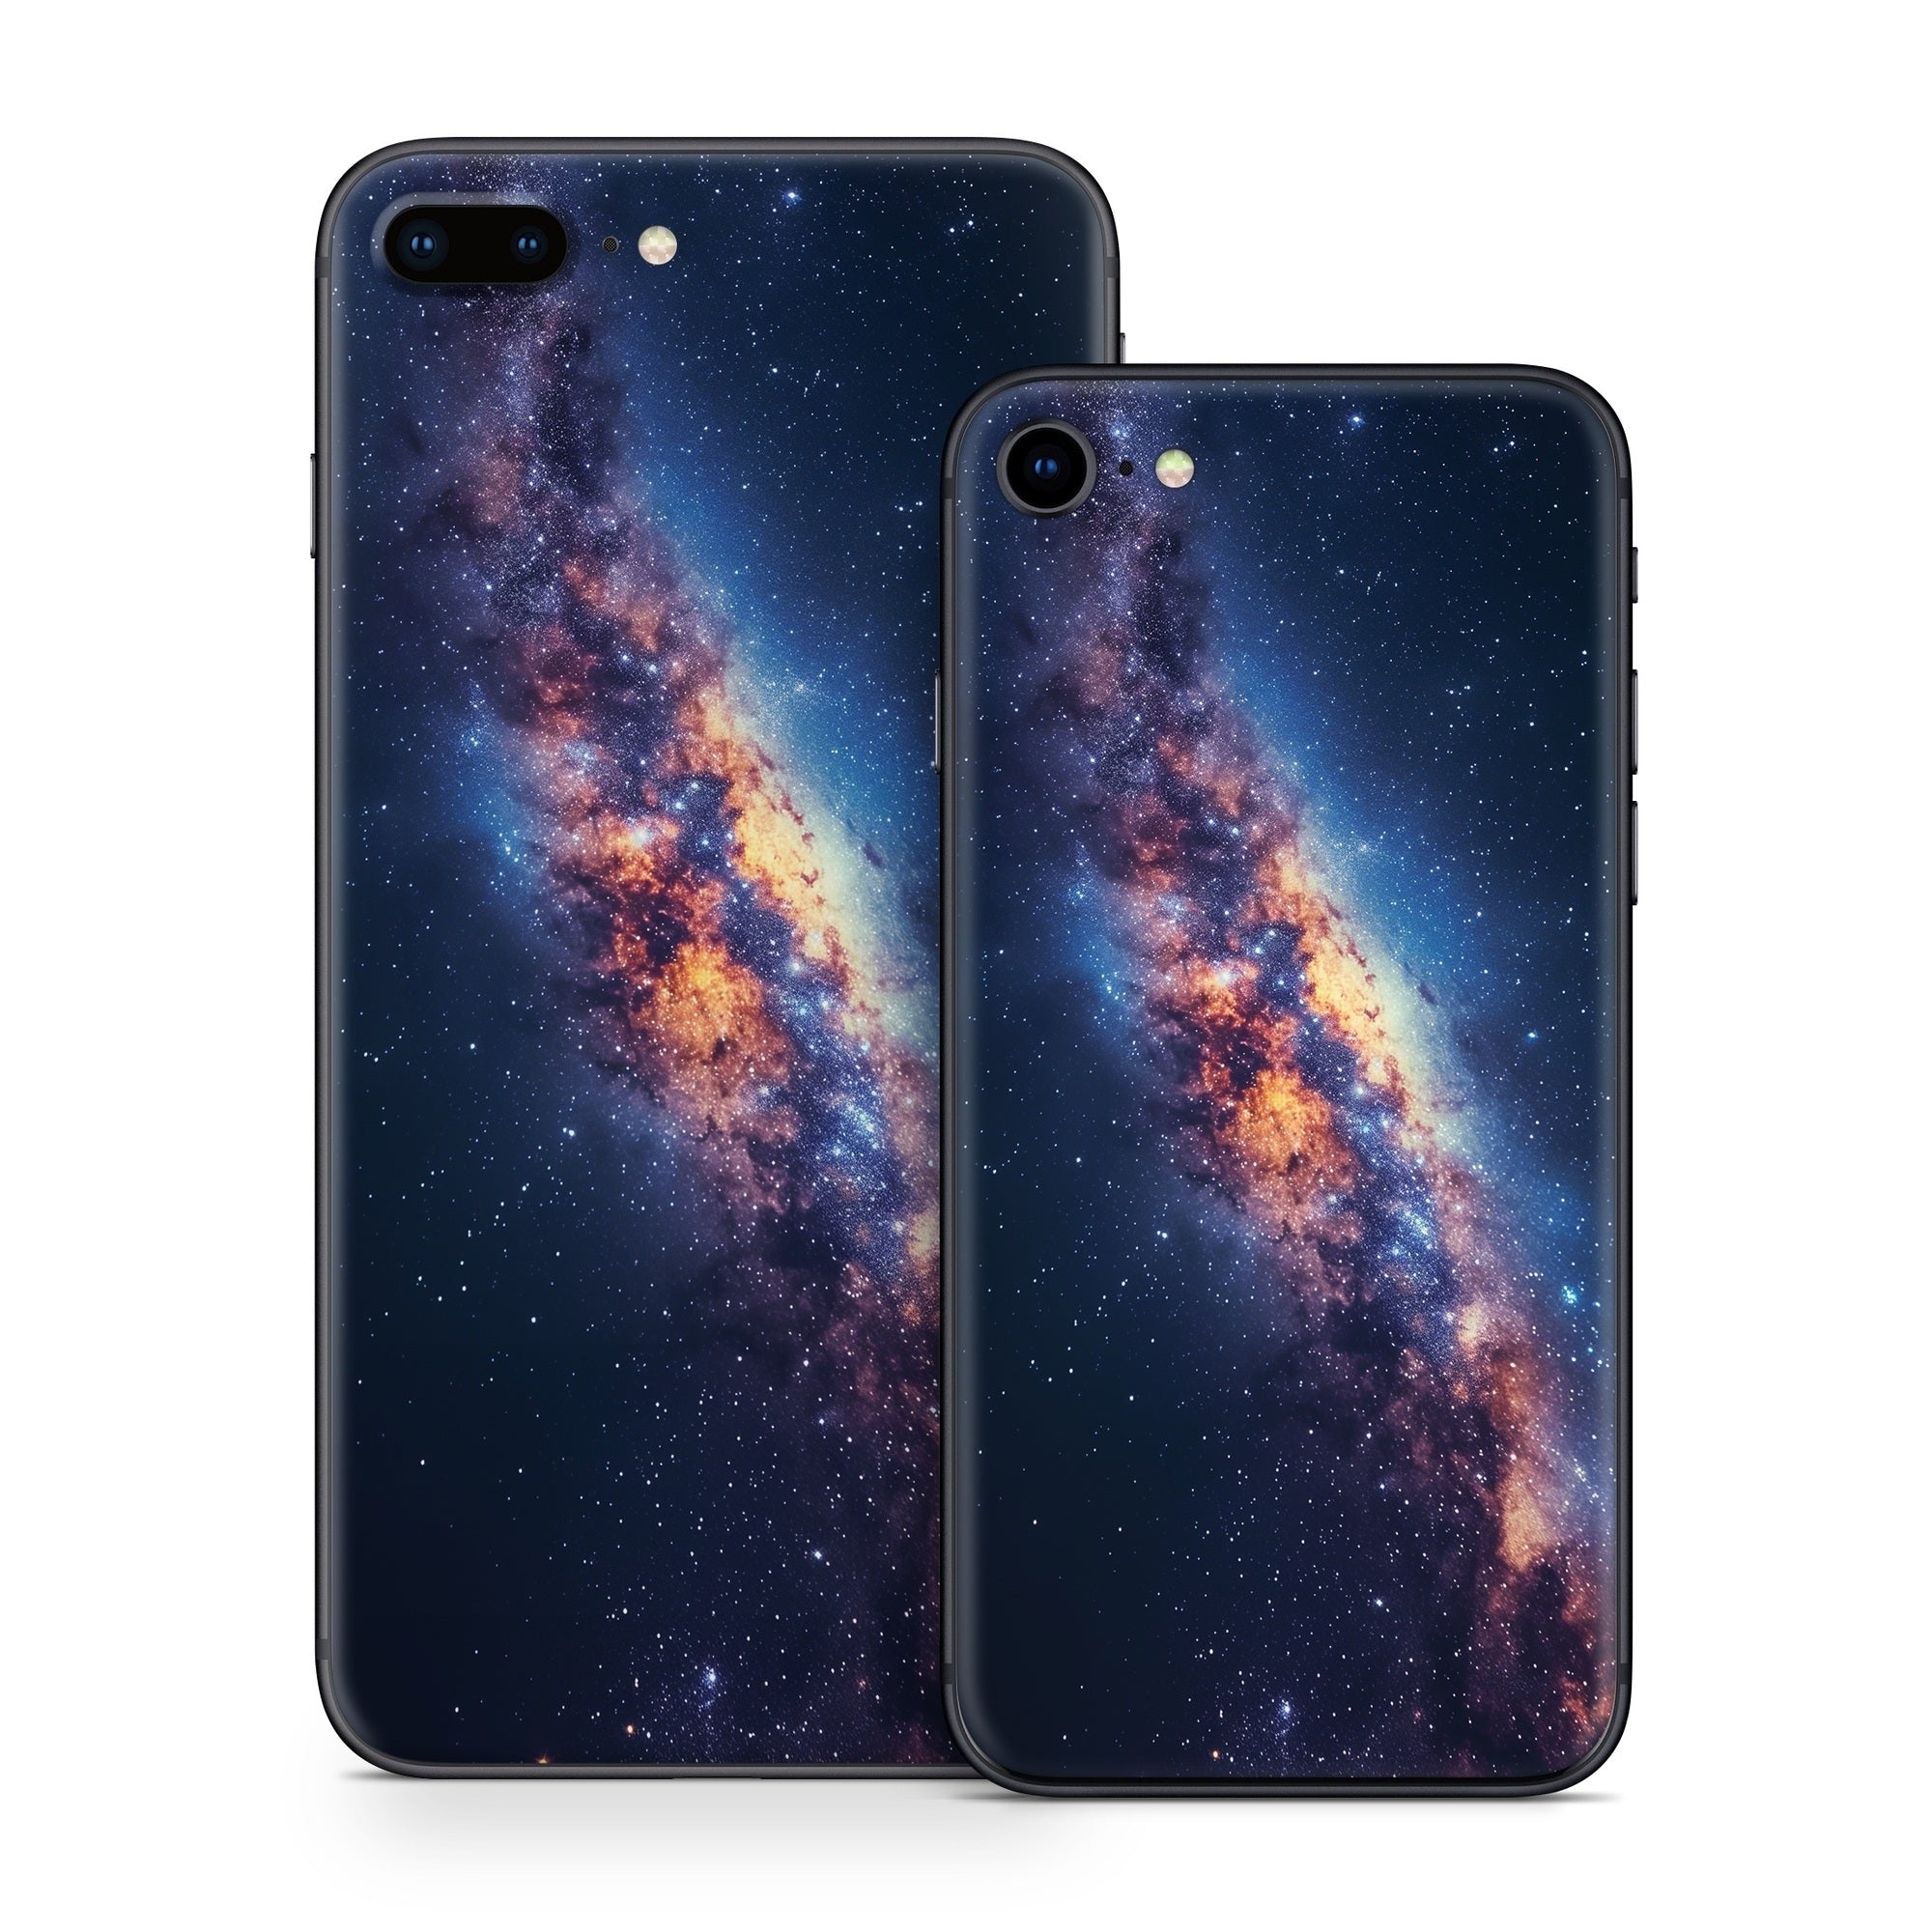 Intergalactic - Apple iPhone 8 Skin